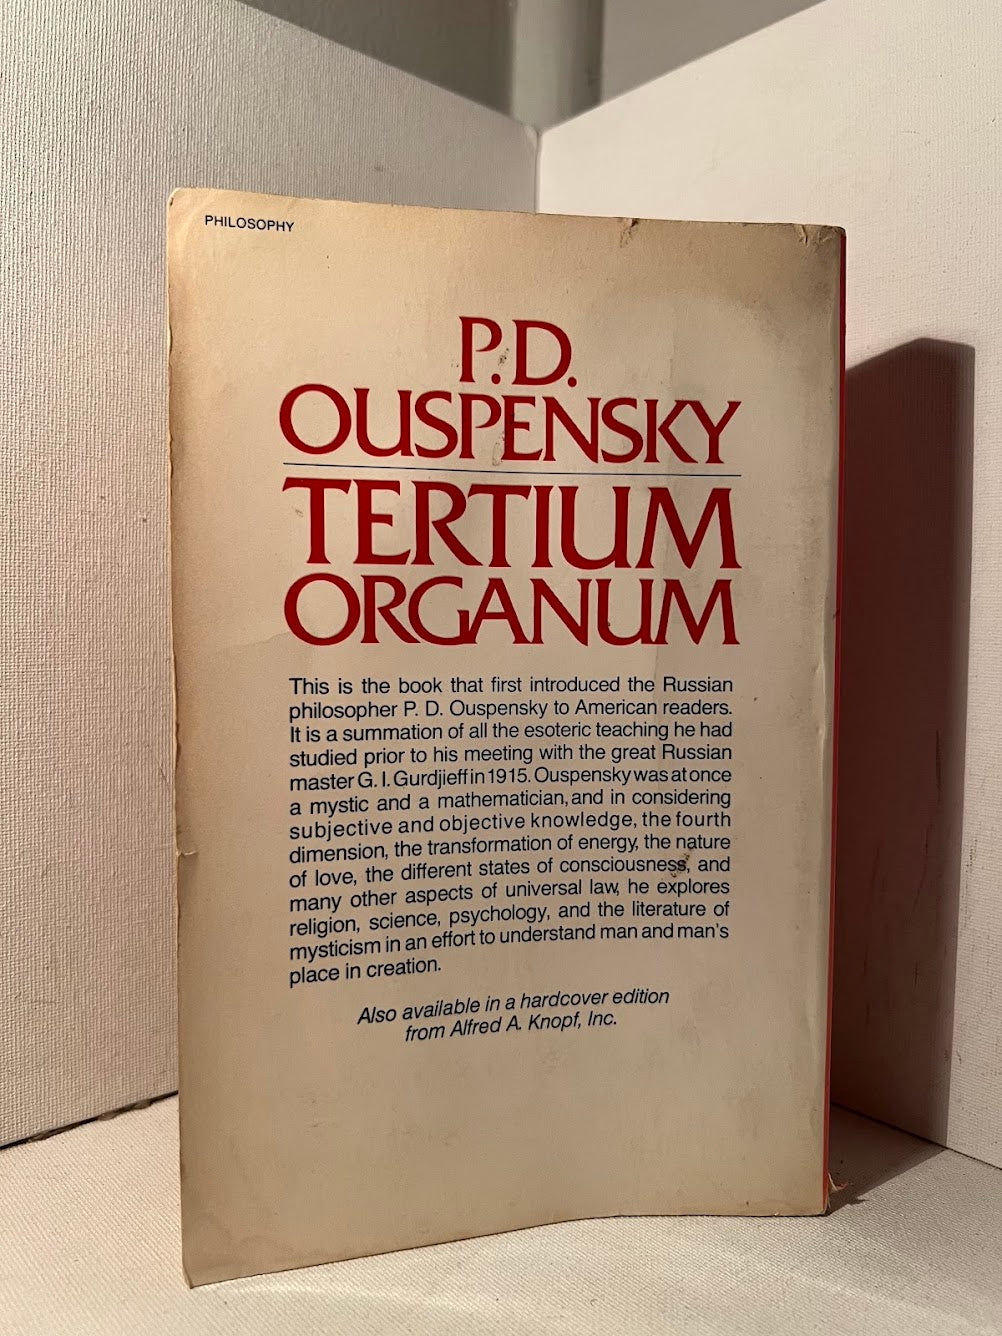 Tertium Organum by P.D. Ouspensky